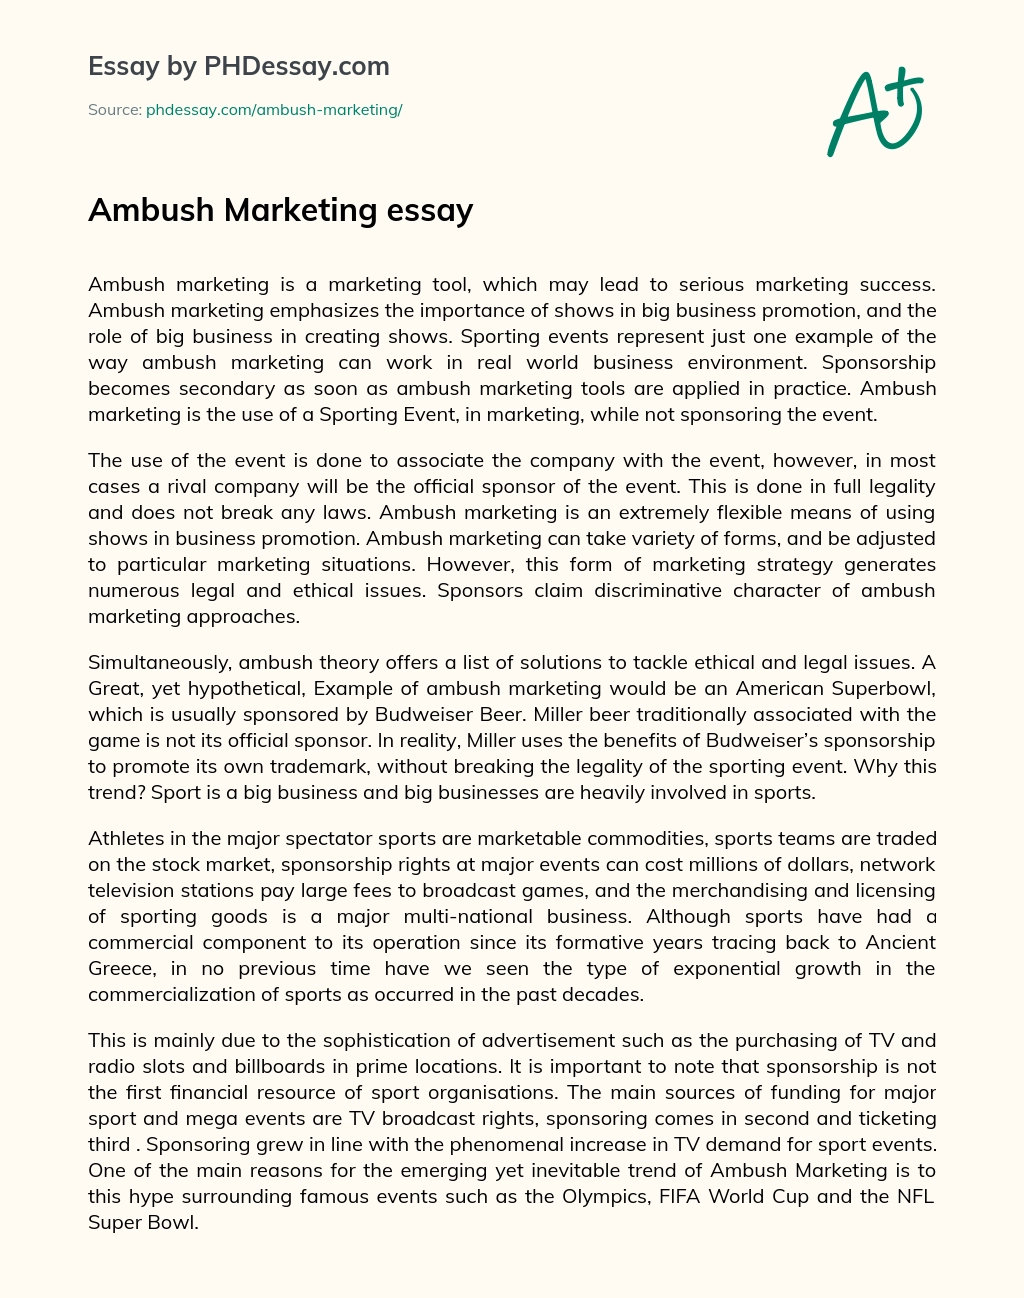 Ambush Marketing essay essay